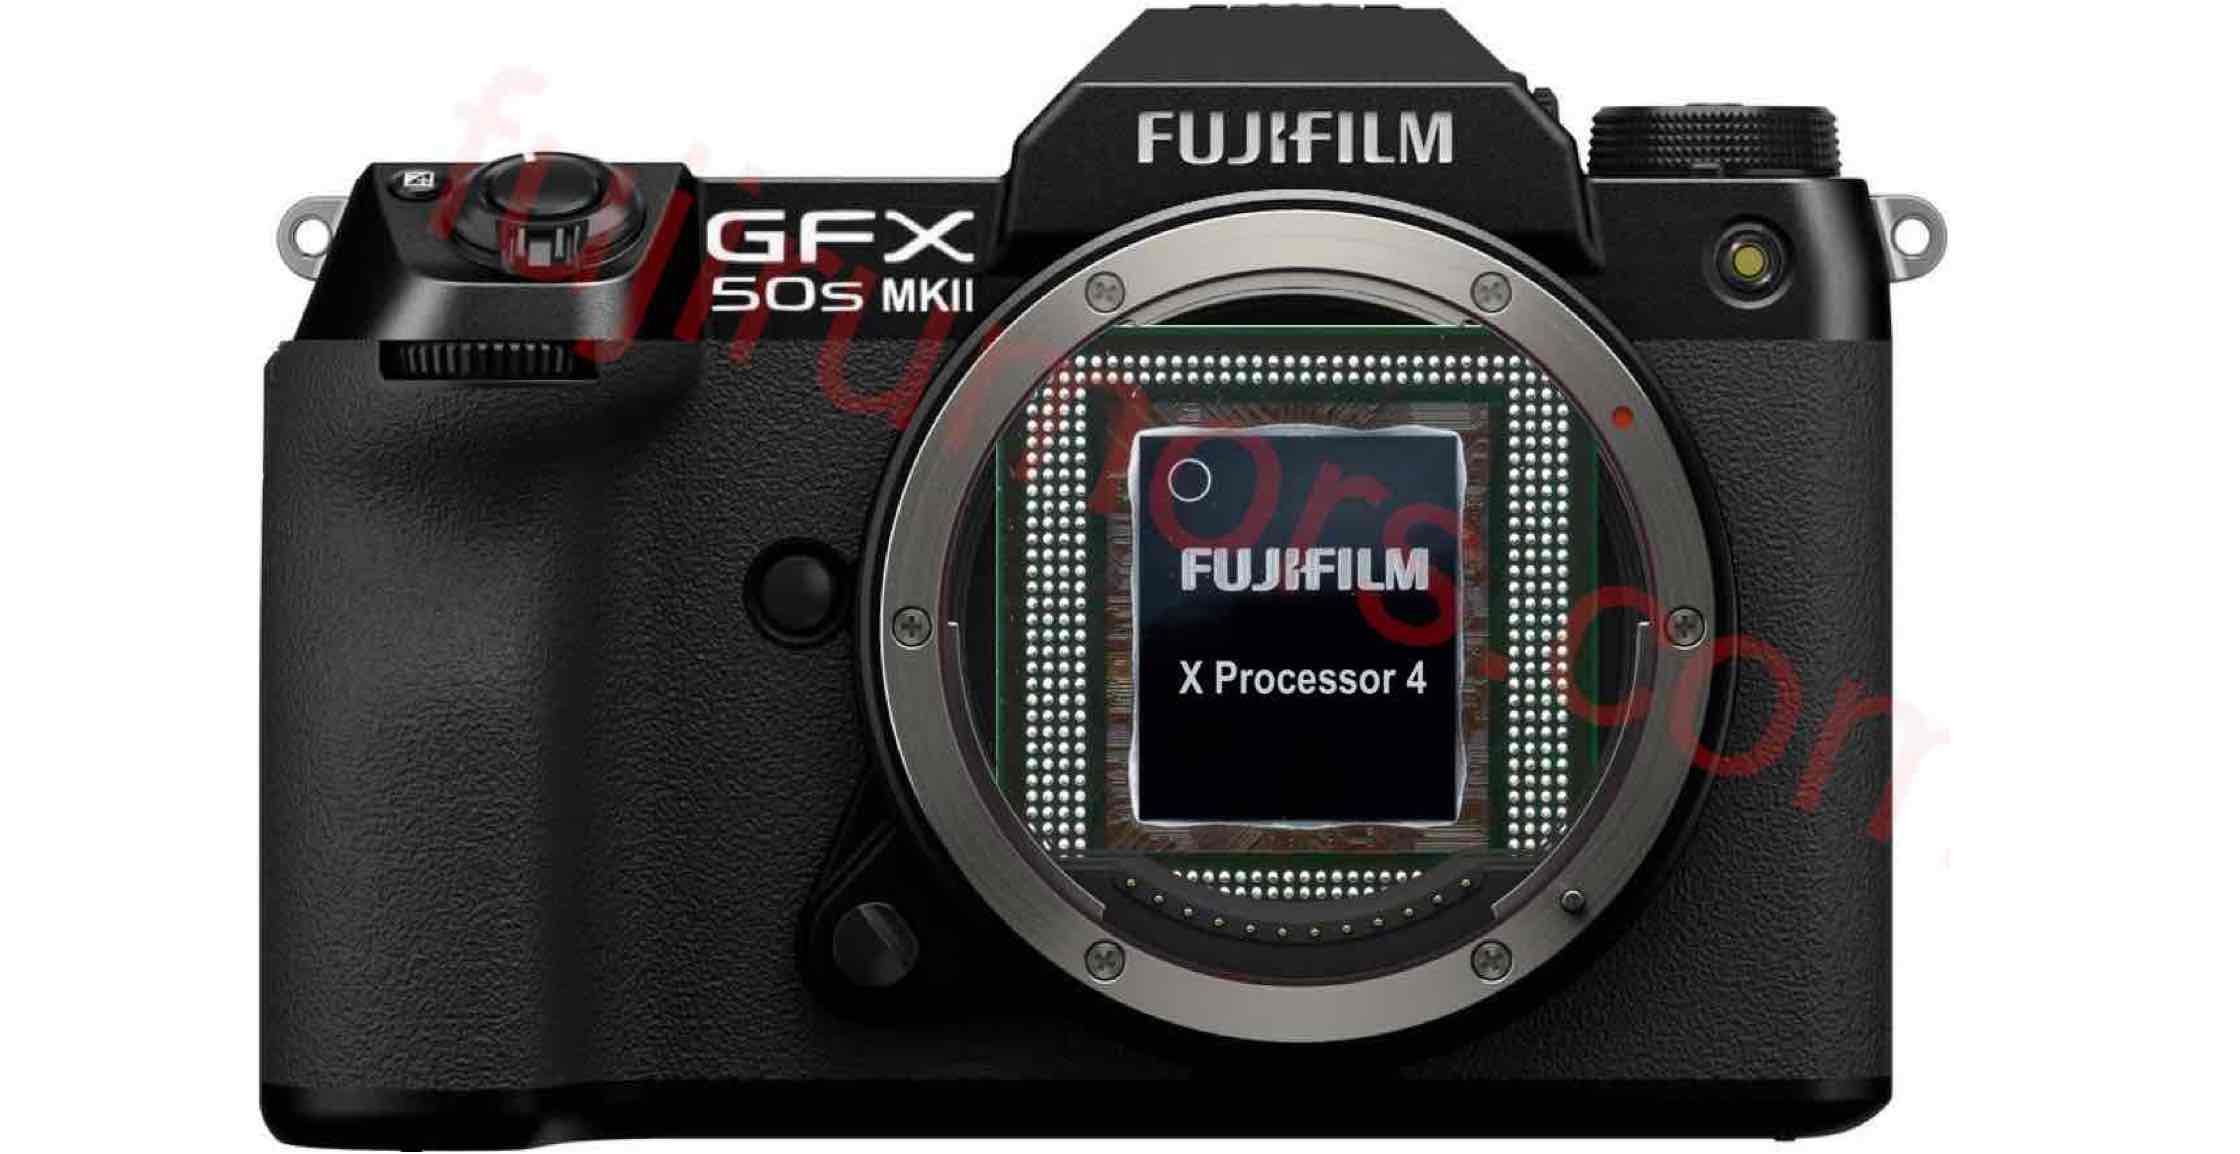 Fujifilm GFX50SII has X Processor 4 for Faster Autofocus and 